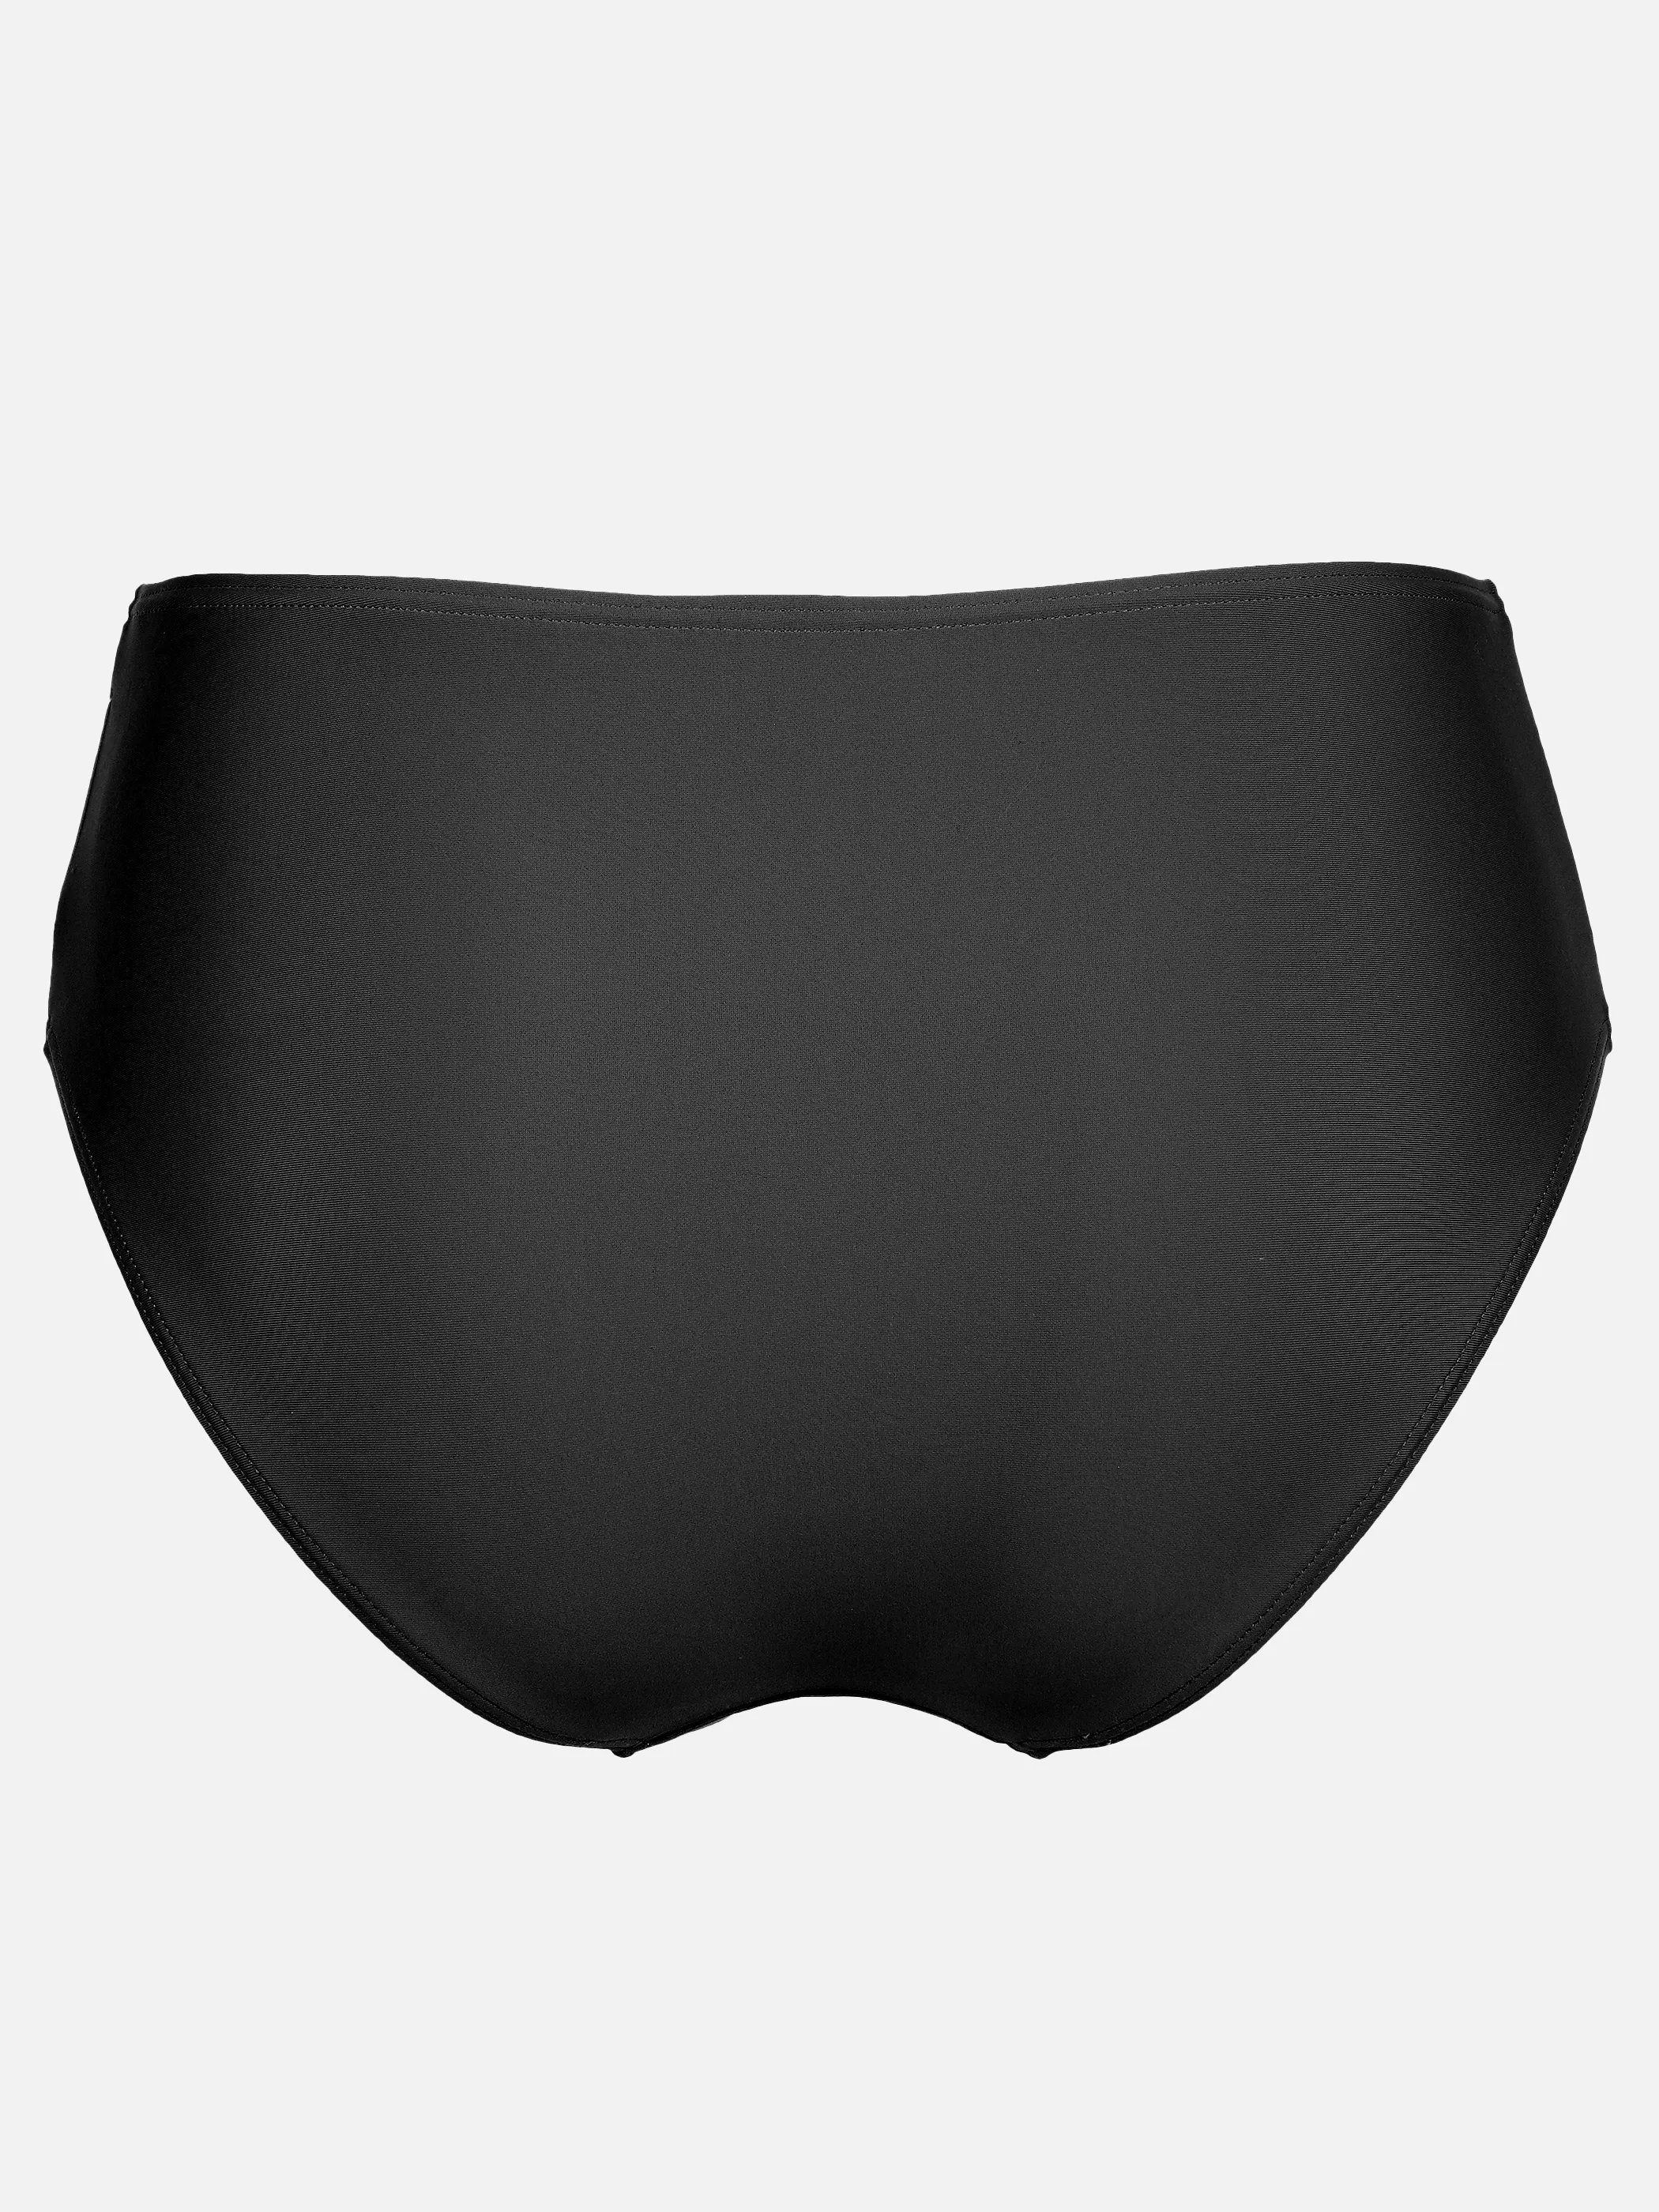 Grinario Sports Da-Bikini Hose Schwarz 890112 BLACK 2